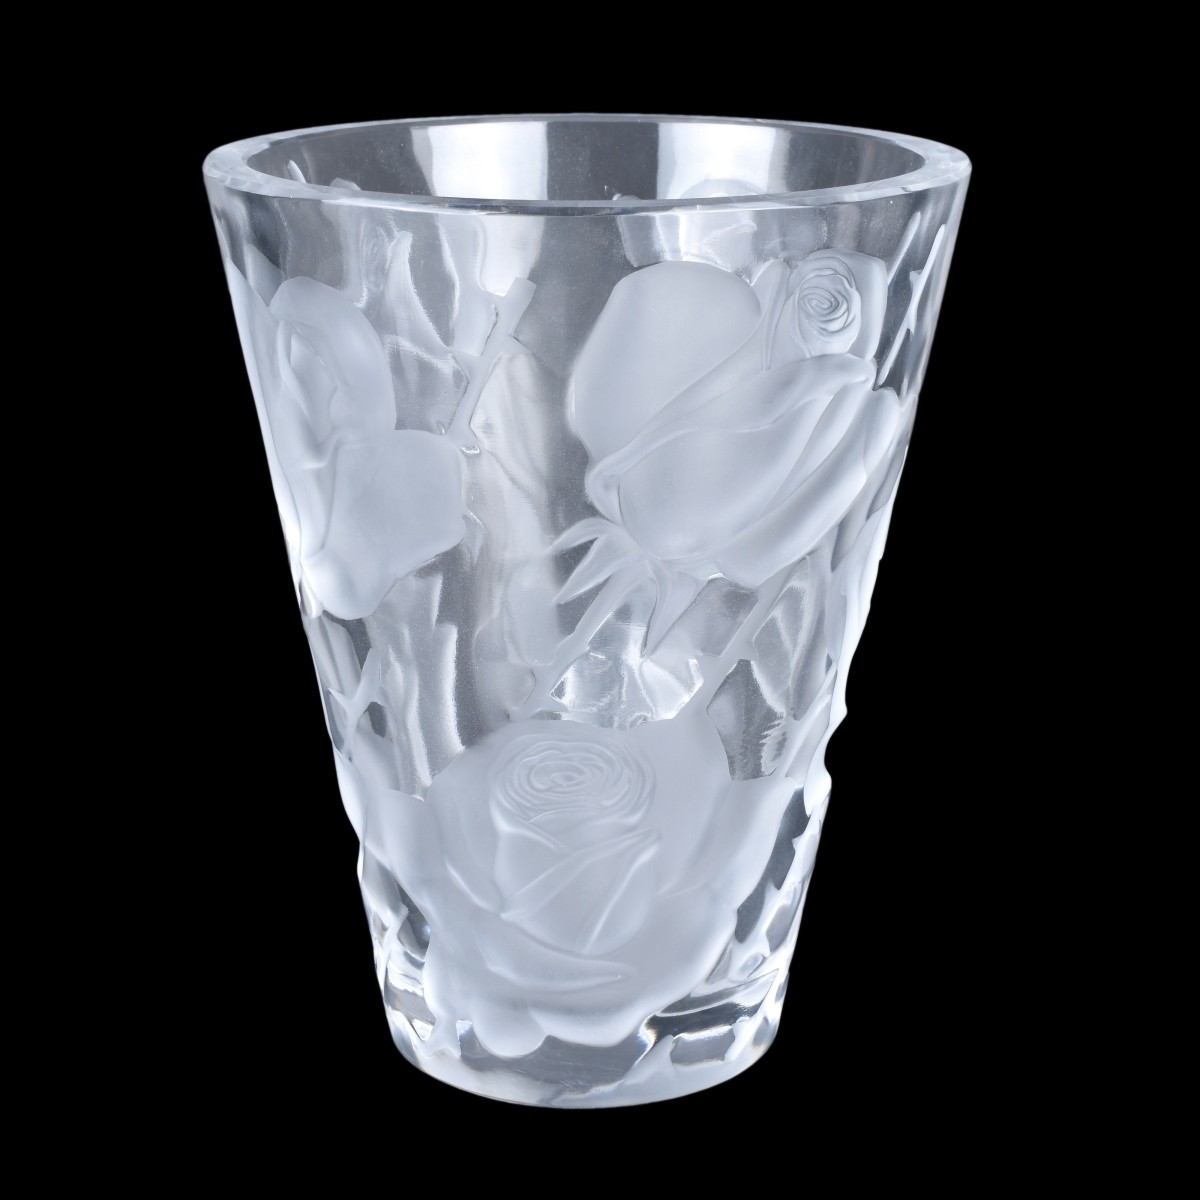 Lalique Crystal "Ispahan" Vase